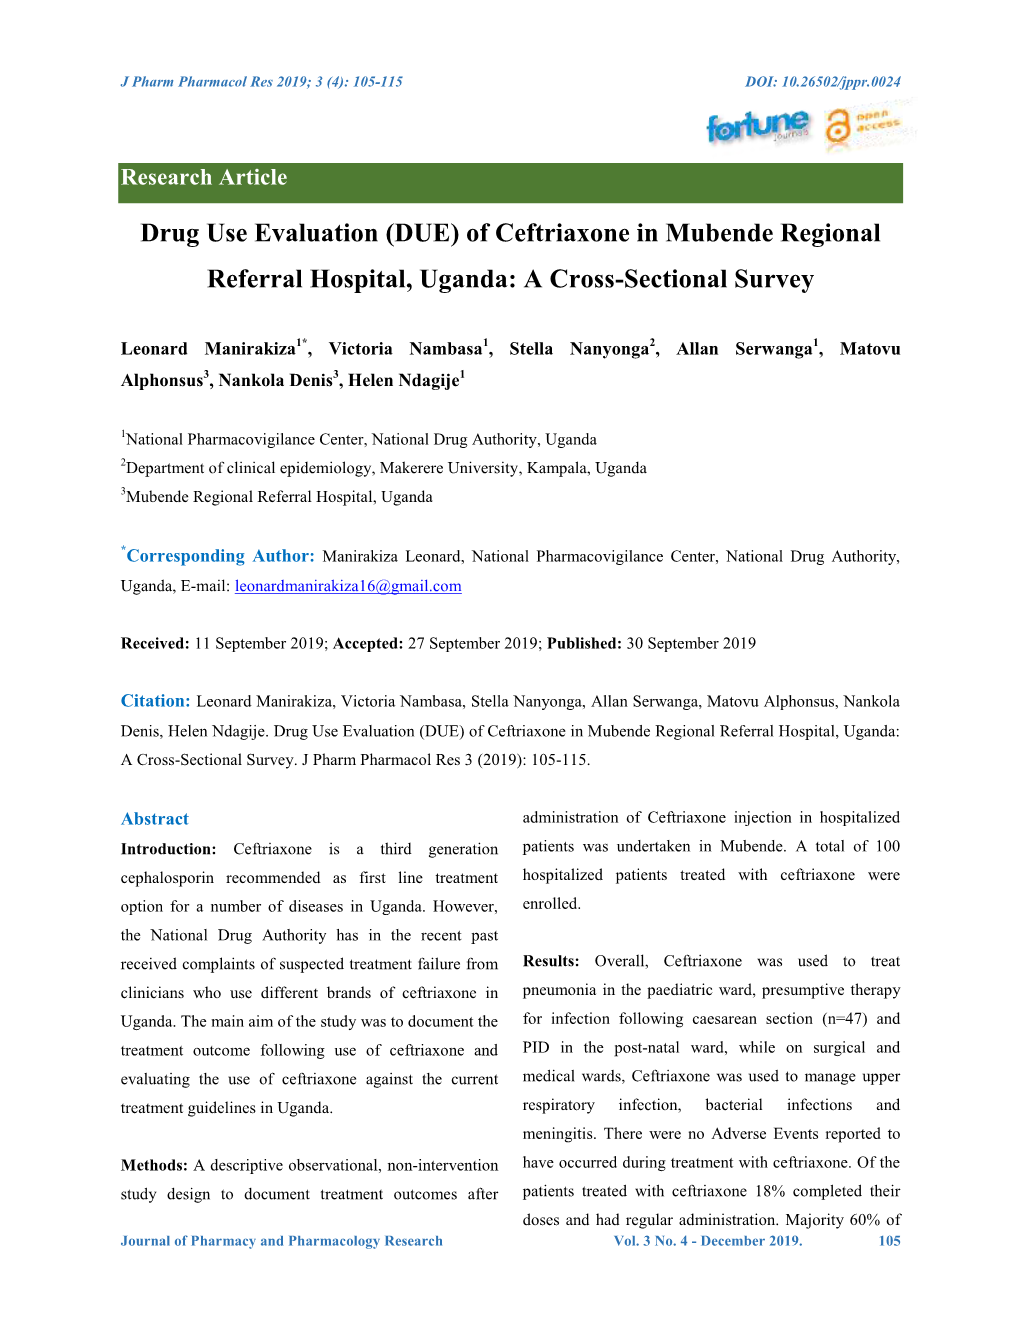 Drug Use Evaluation (DUE) of Ceftriaxone in Mubende Regional Referral Hospital, Uganda: a Cross-Sectional Survey